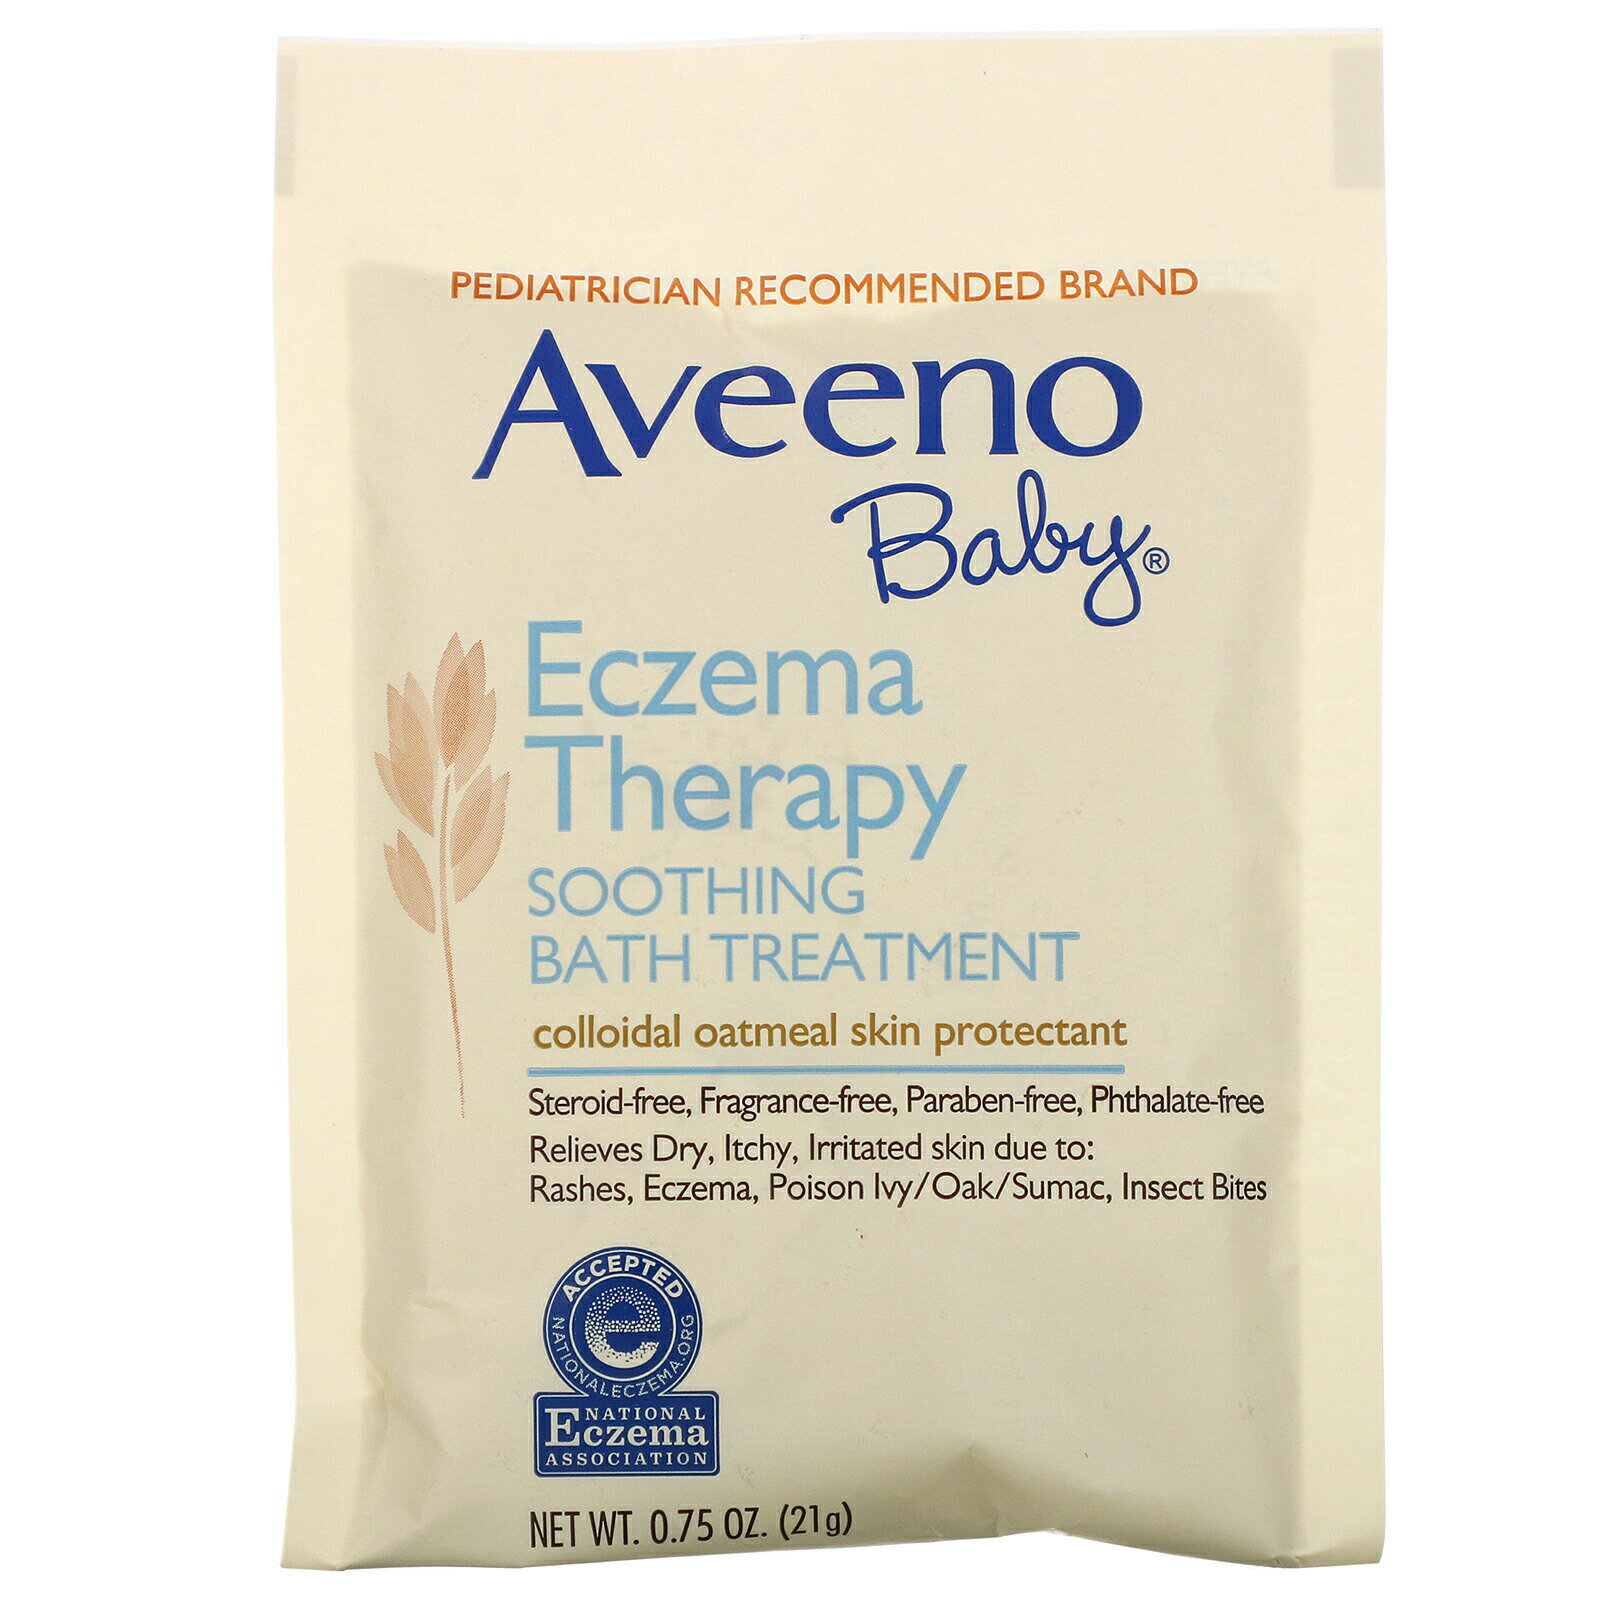 AVEENO ベビー Eczema Therapy 症状を緩和するバストリートメント 無香料 5バスパック 3.75オンス(106 g)